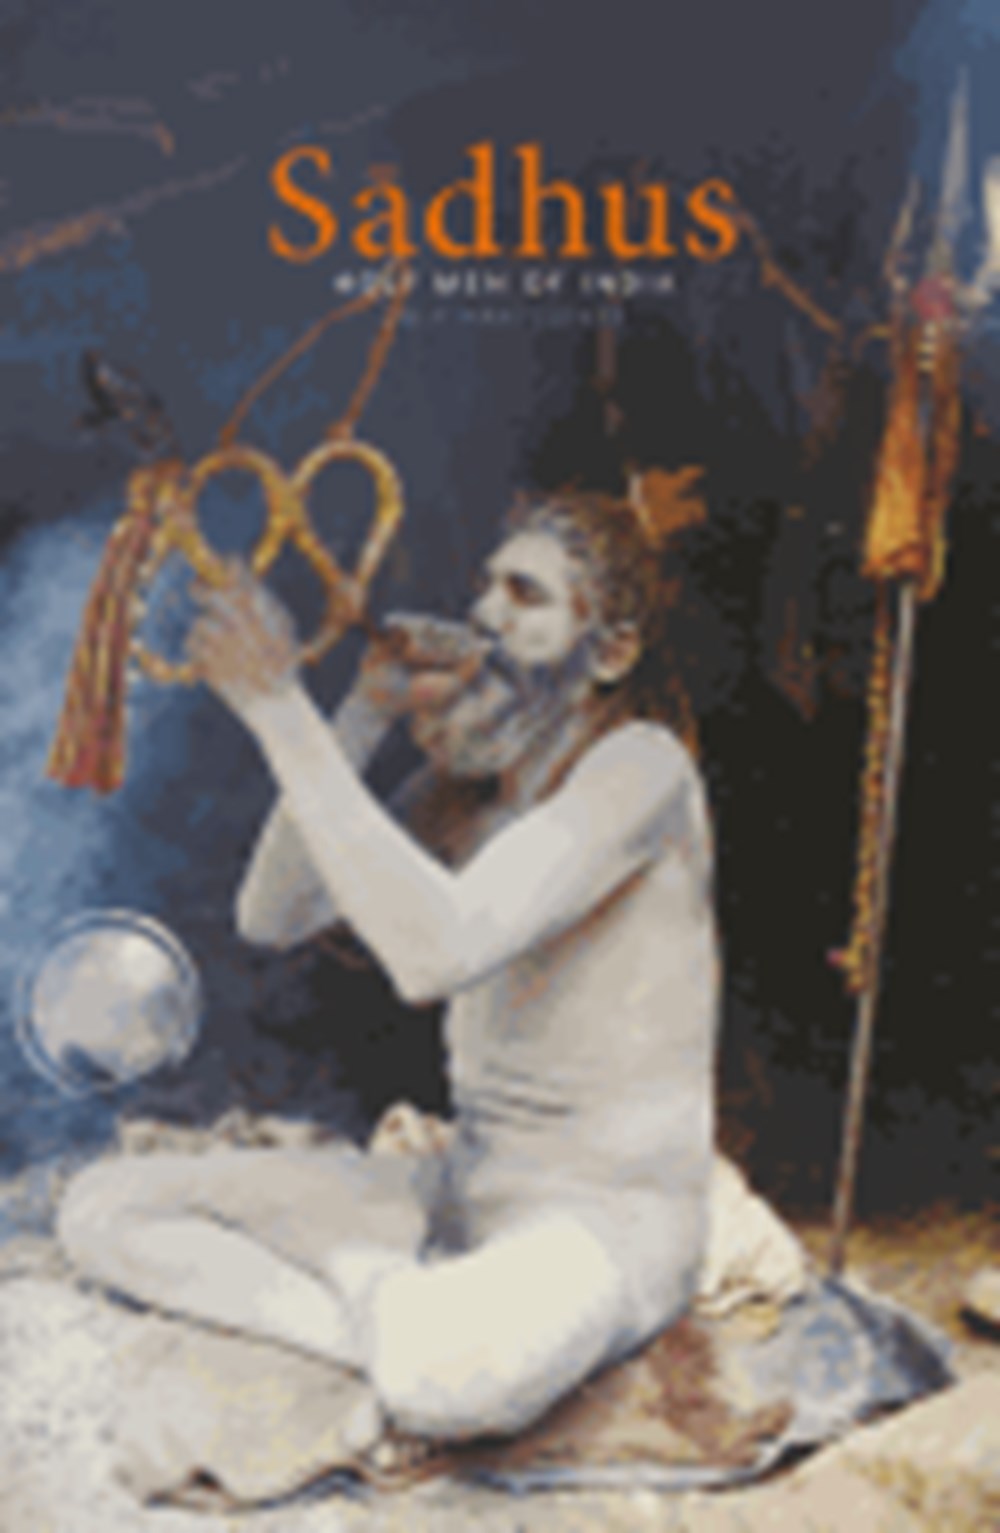 Saadhus: Holy Men of India